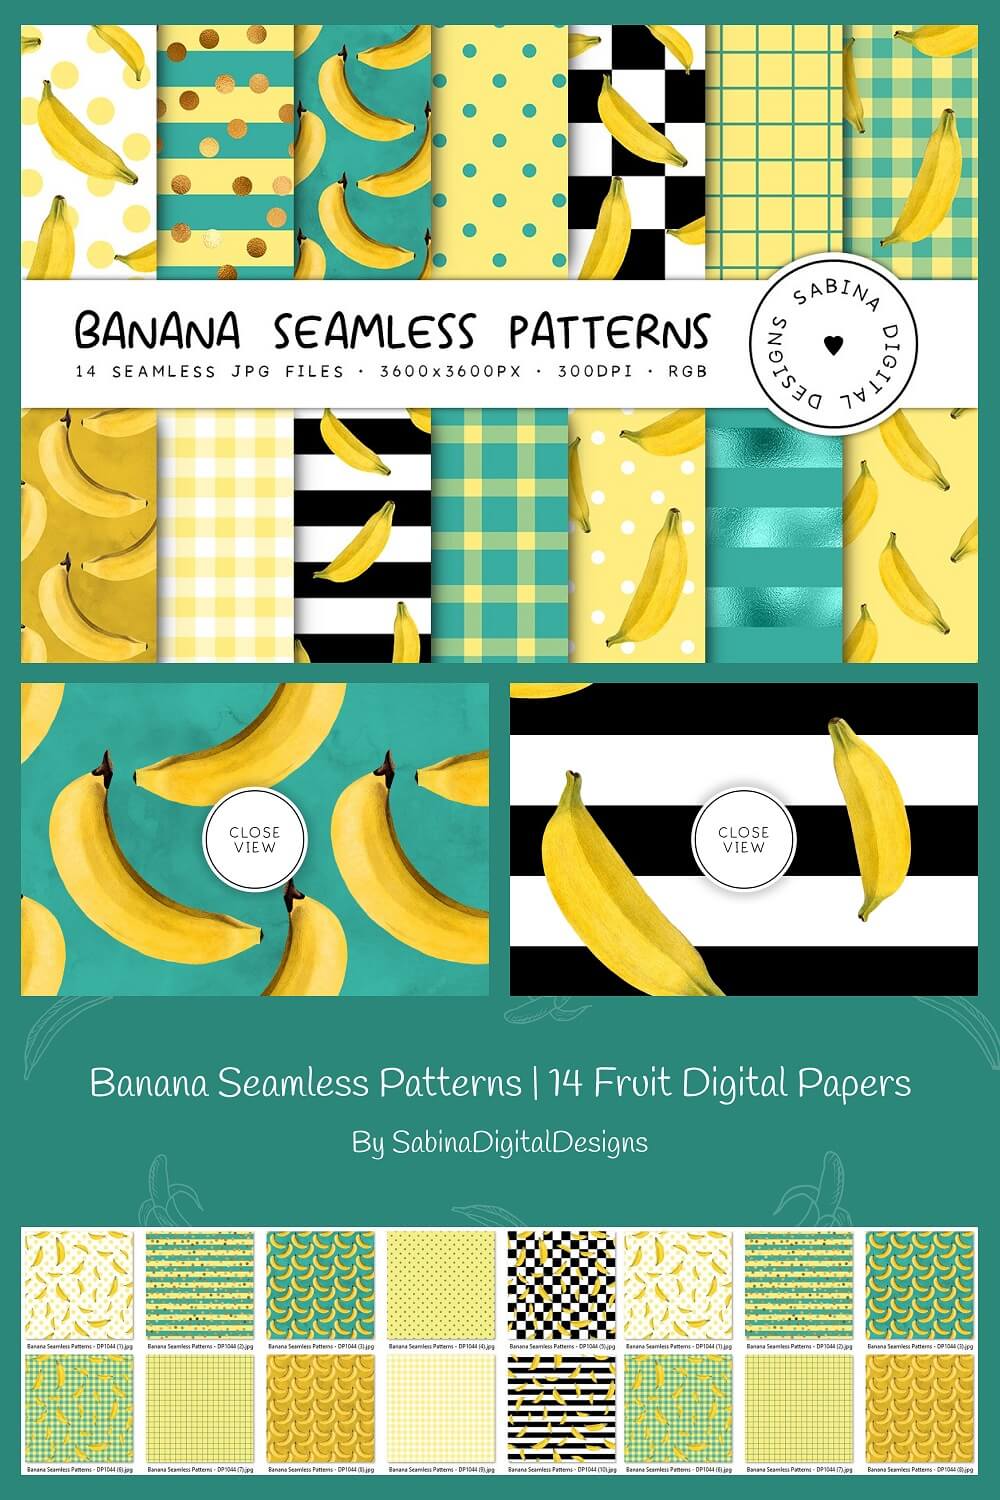 14 banana seamless patterns.